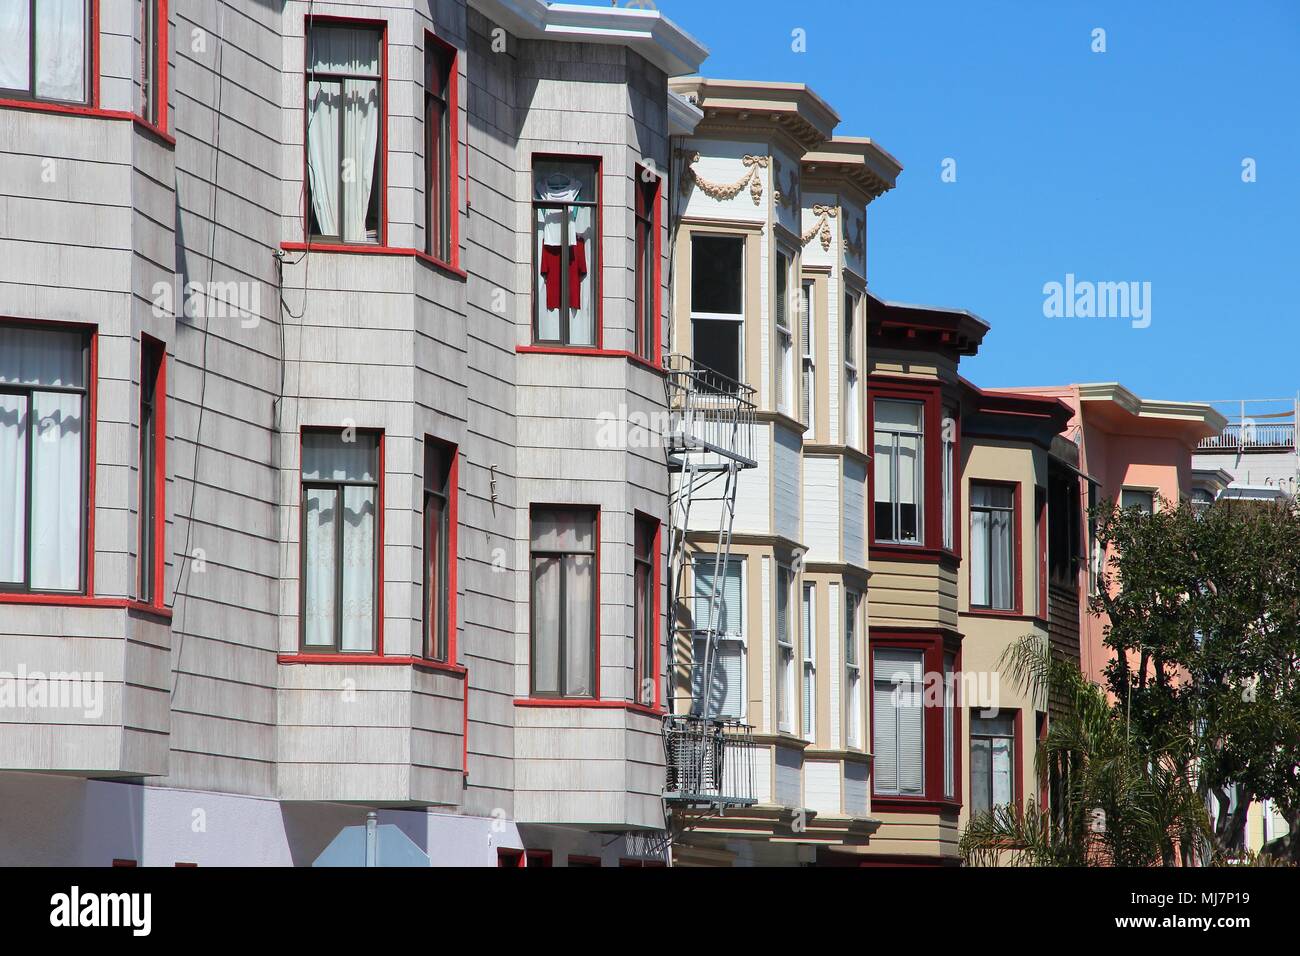 San Francisco, California, United States - beautiful old architecture in Telegraph Hill area. Stock Photo